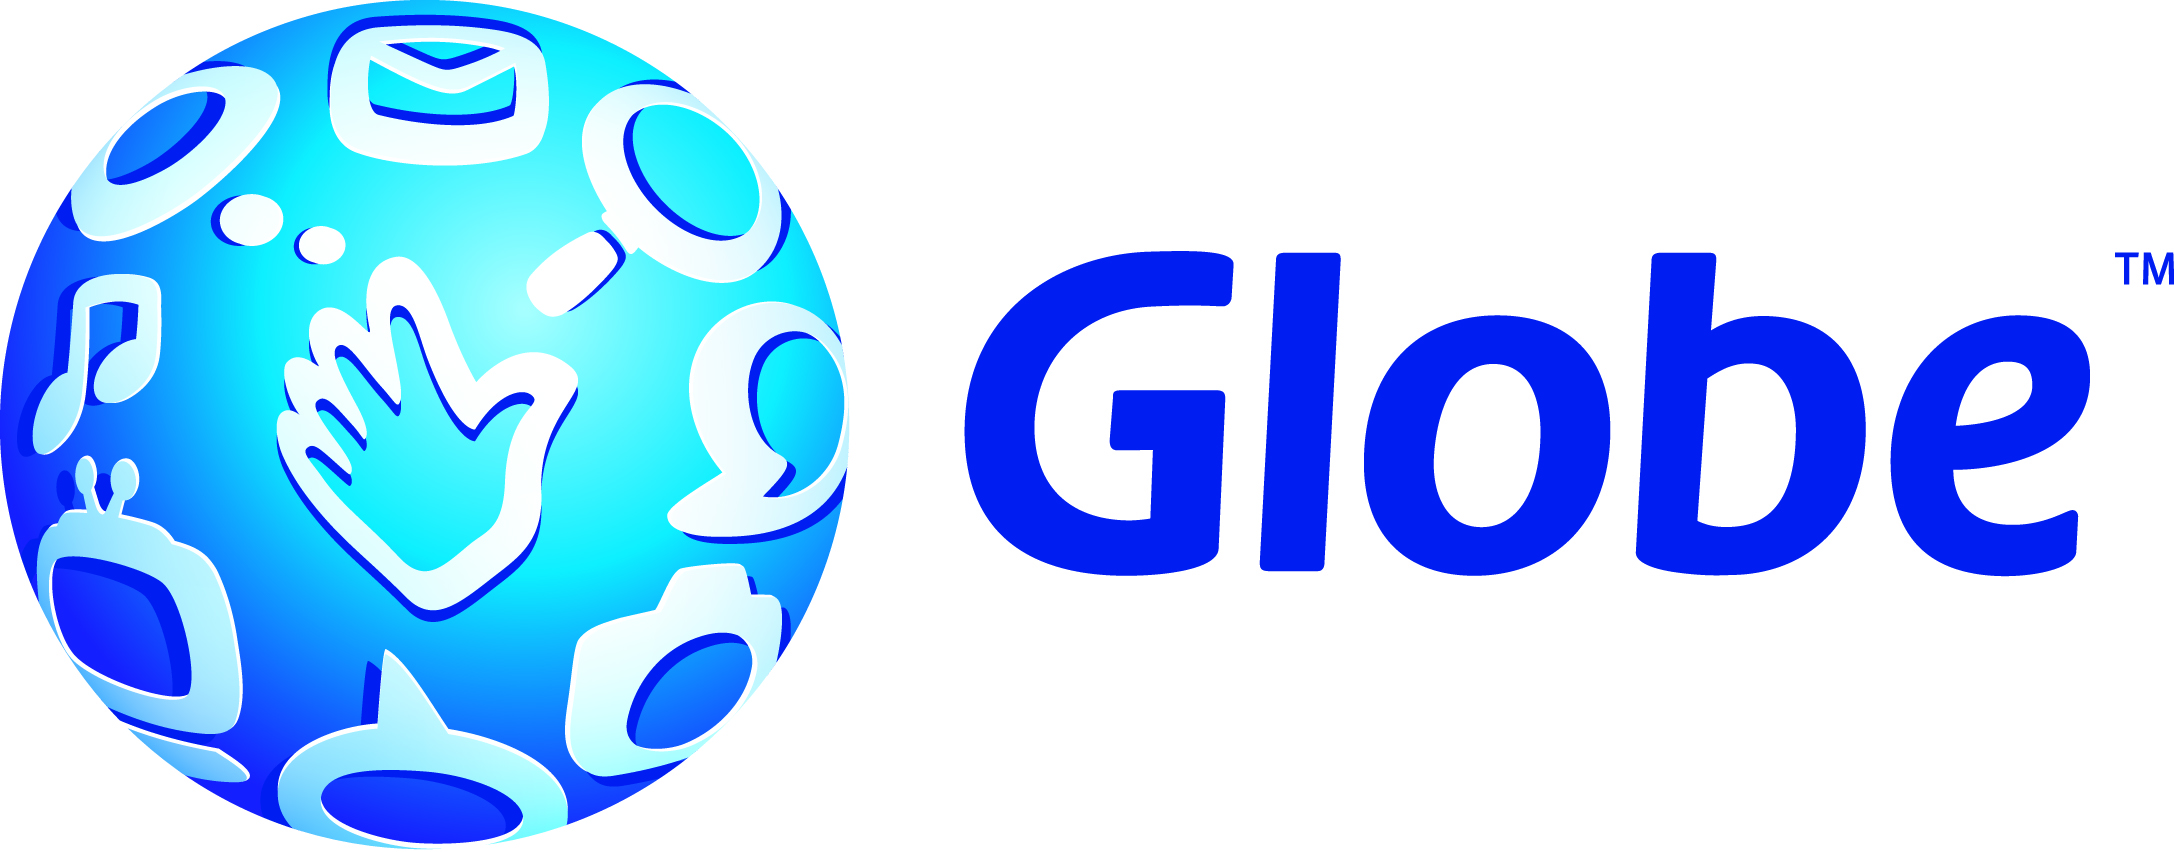 Globe Telecom Logo - ClipArt Best